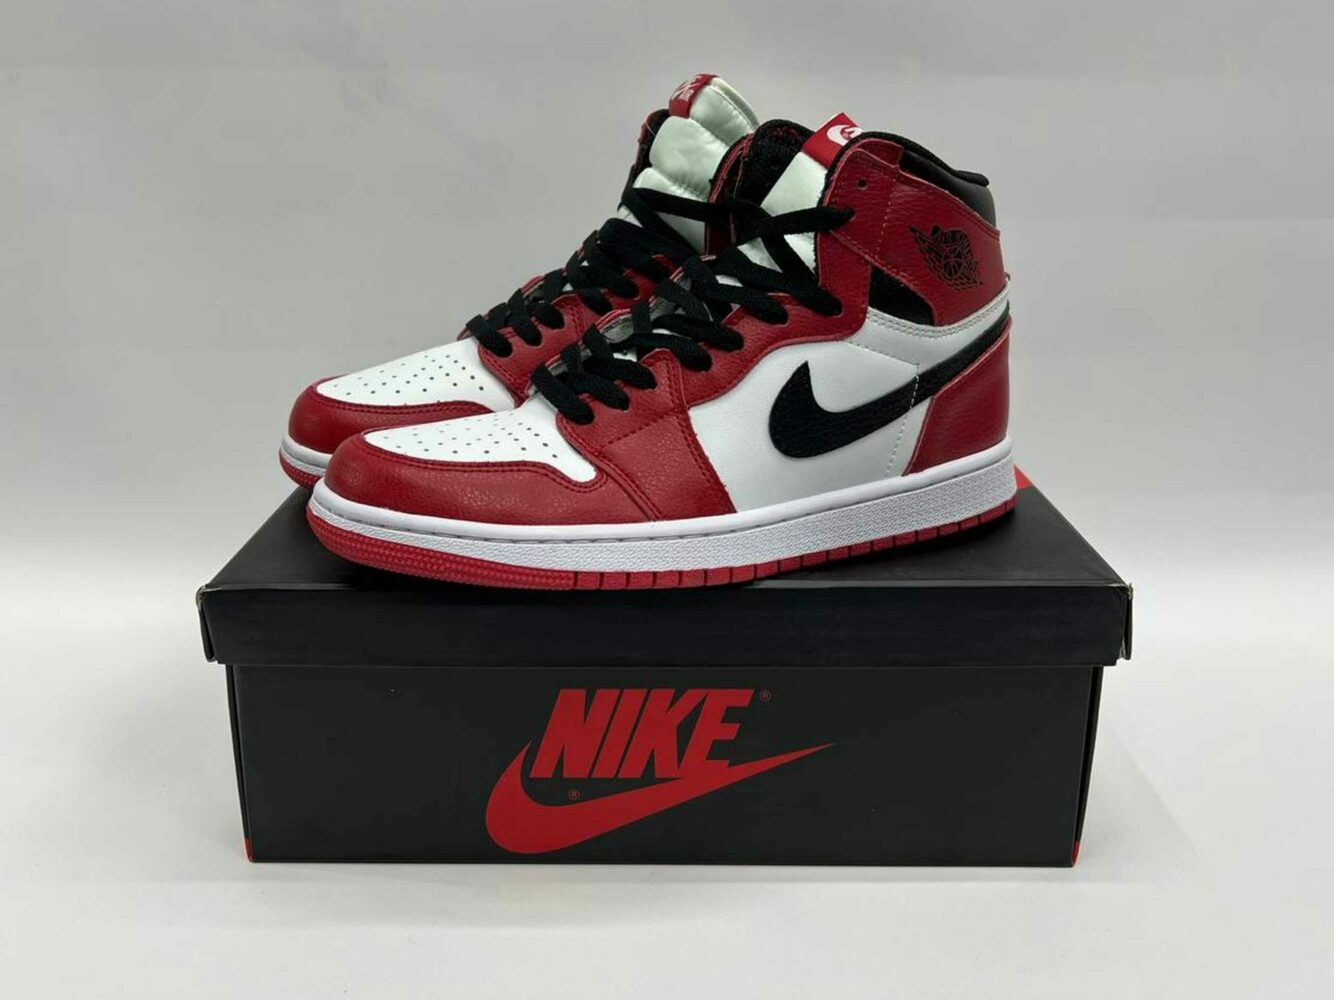 Jordan 1 retro high og red white 575441_101 купить